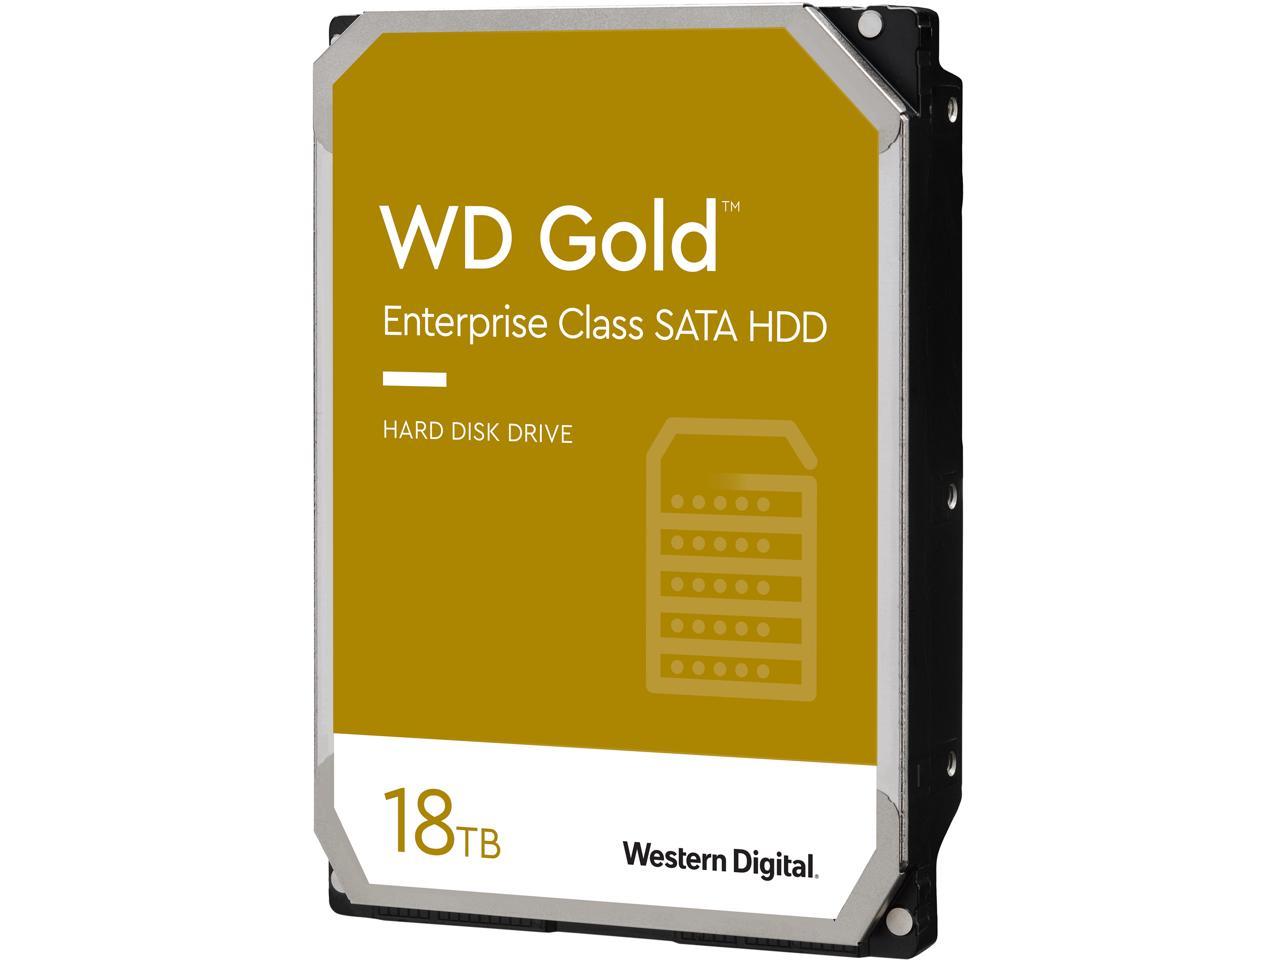 18TB WD Gold Enterprise Class Hard Disk Drive $360